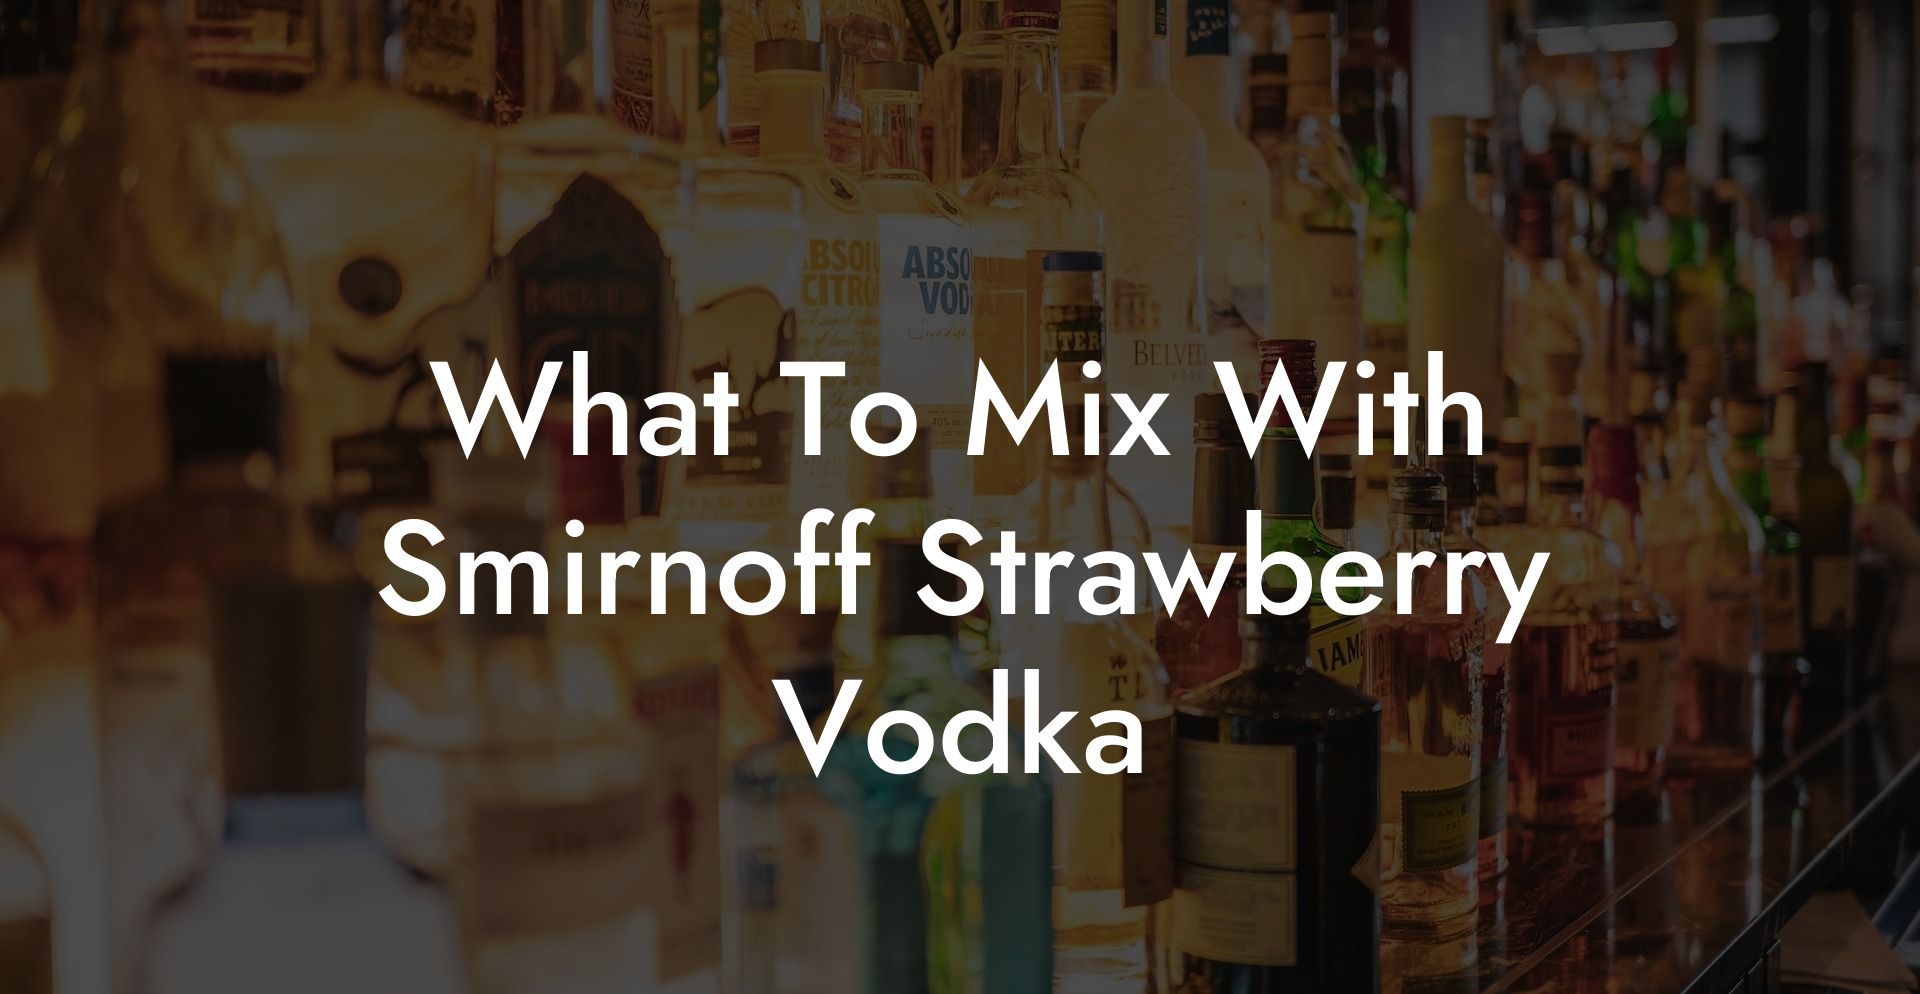 What To Mix With Smirnoff Strawberry Vodka